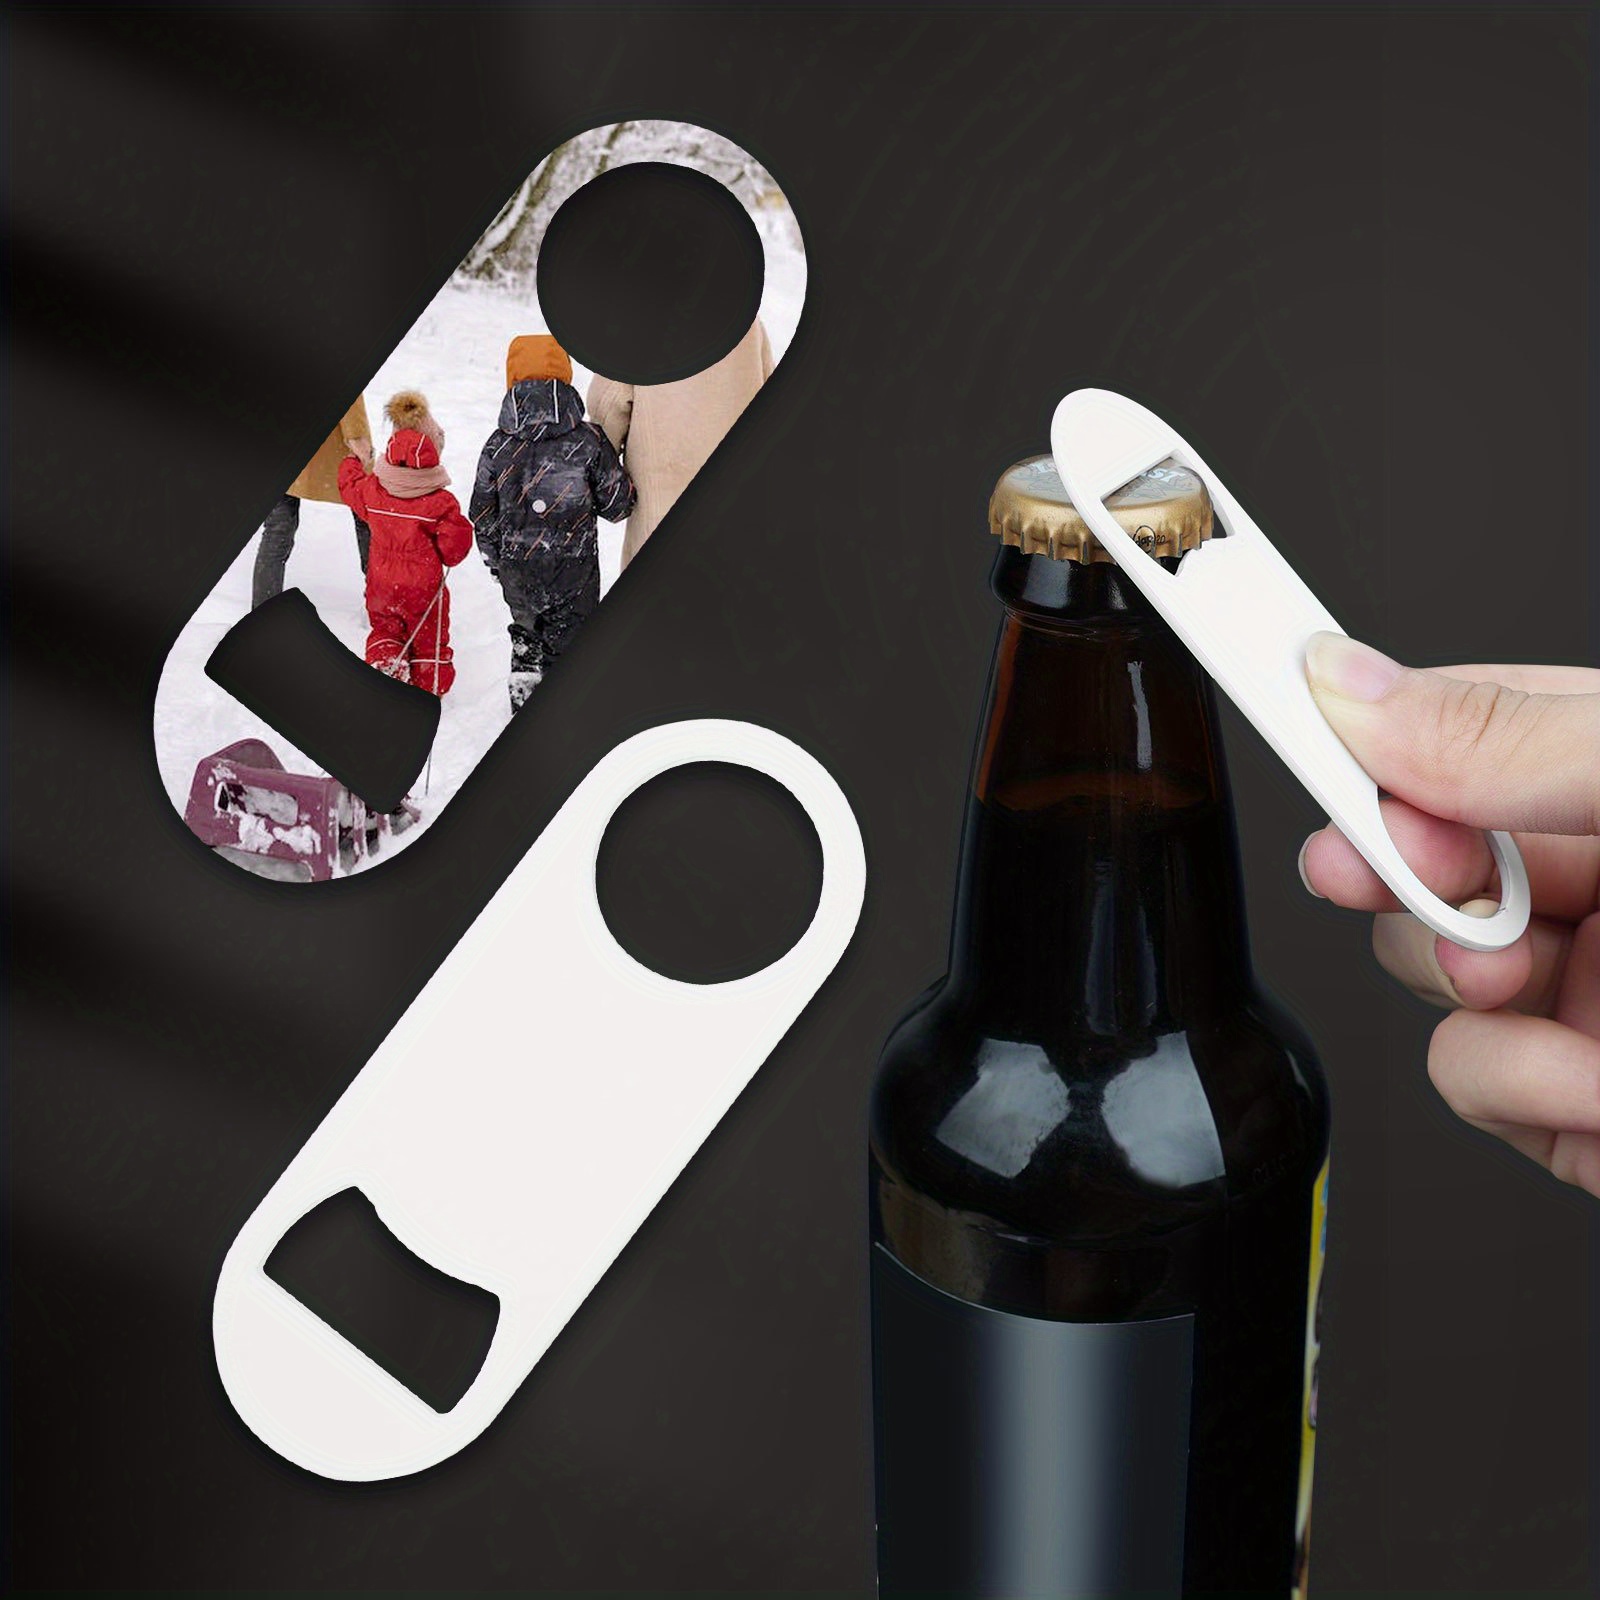 15pcs Sublimation Blanks Keychains Metal Bottle Opener DIY Gifts